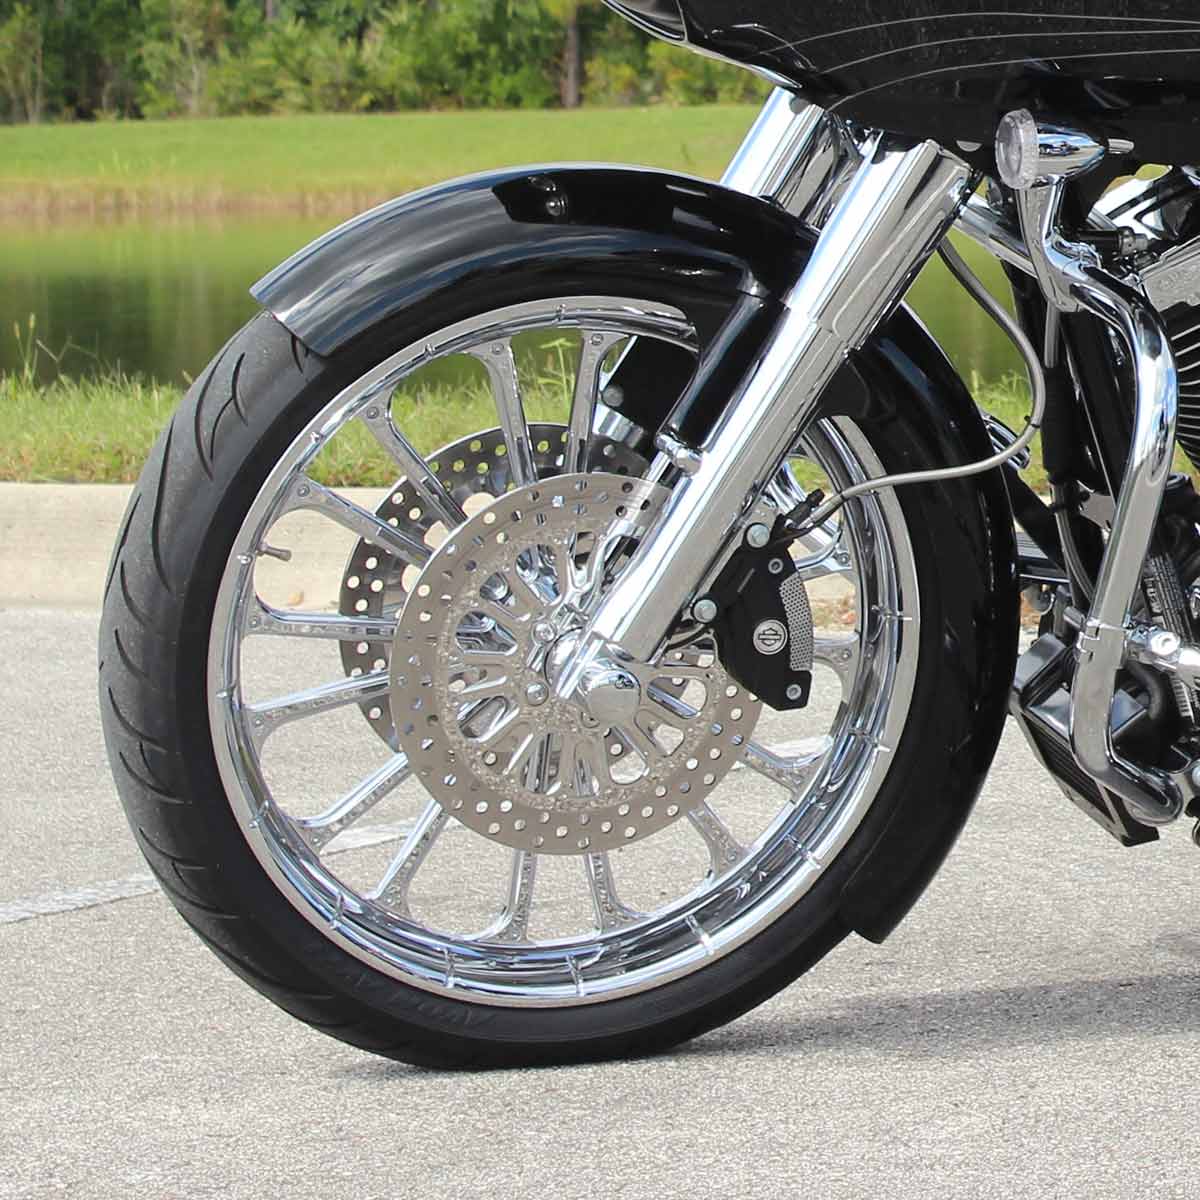 21" Wrapper Tire Hugger Front Fenders for Harley-Davidson 1983-2013 Touring Motorcycle Models(21" Wrapper)